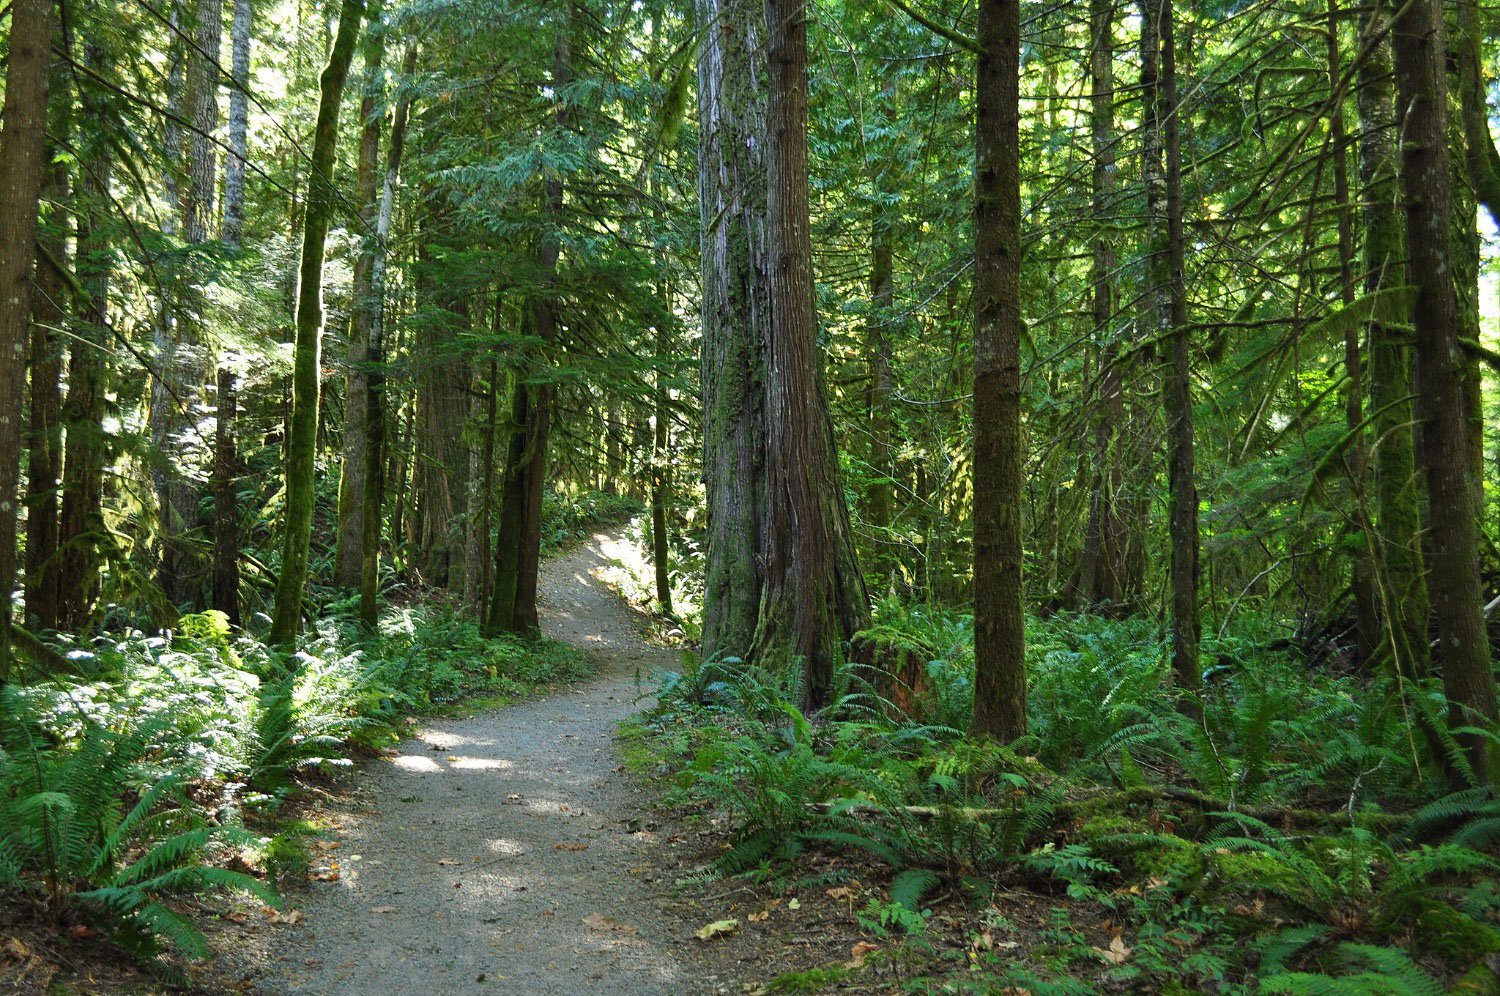 A scenic hiking trail path.